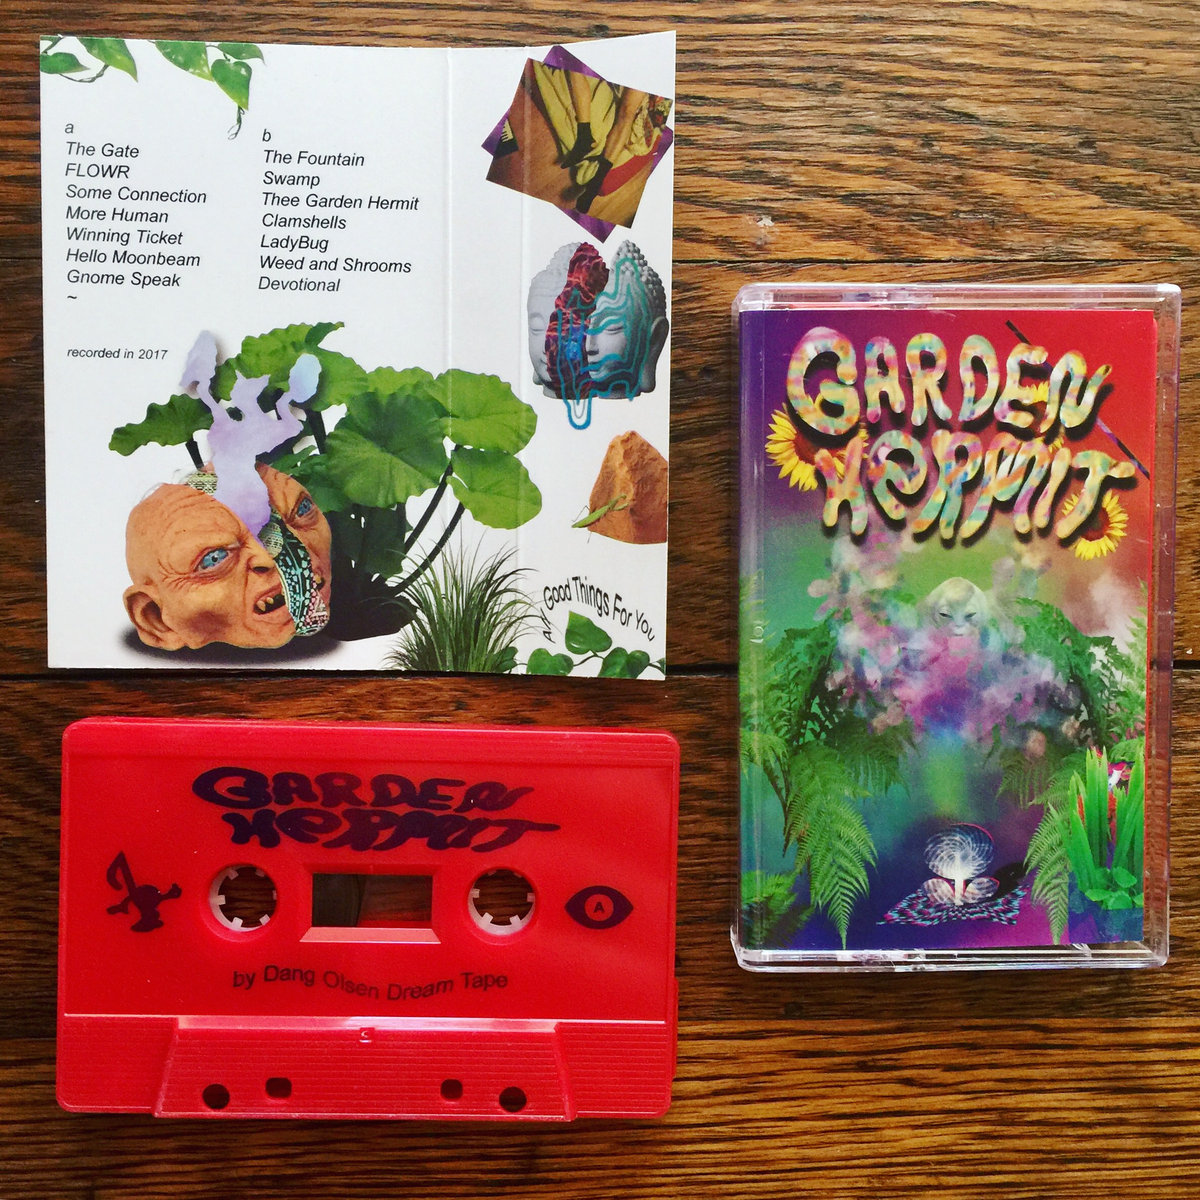 Dang Olsen Dream Tape - Garden Hermit, LISTEN, Chocolate Grinder